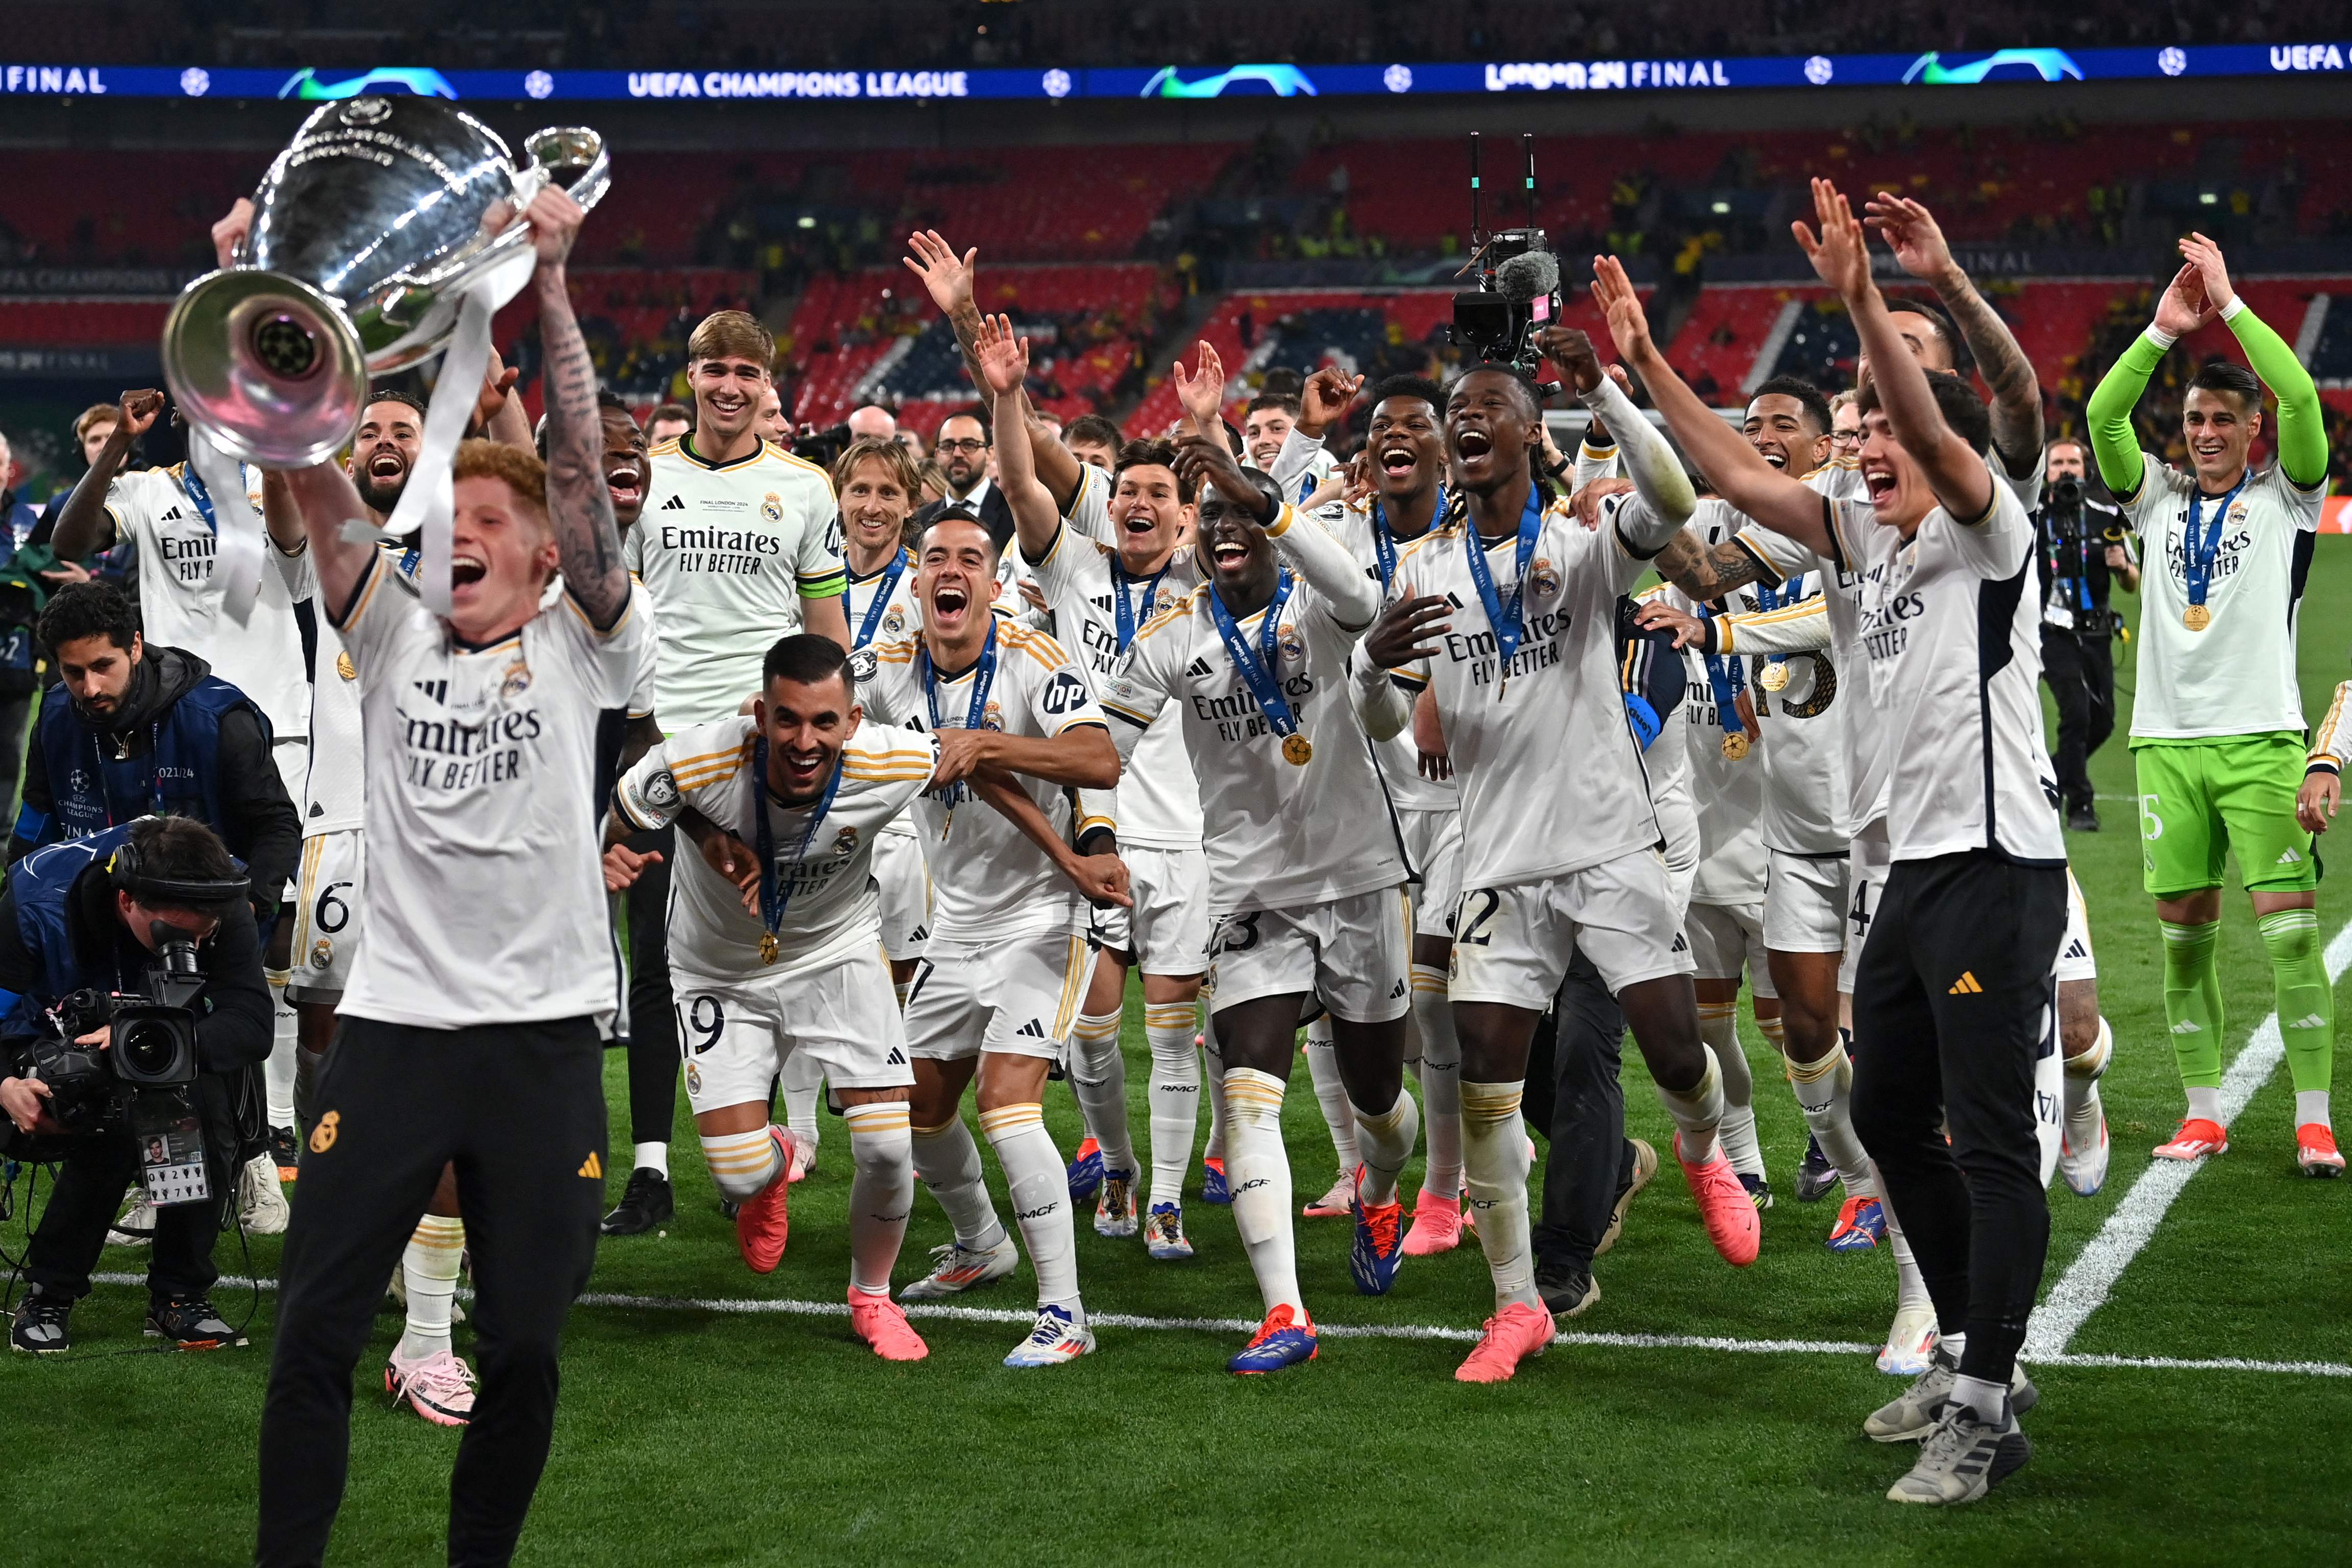 El Real Madrid conquistó su 15 Champions League tras derrotar por 2-0 al Borrussia Dortmund en la final disputada en Wembley. (Foto Prensa Libre: AFP)